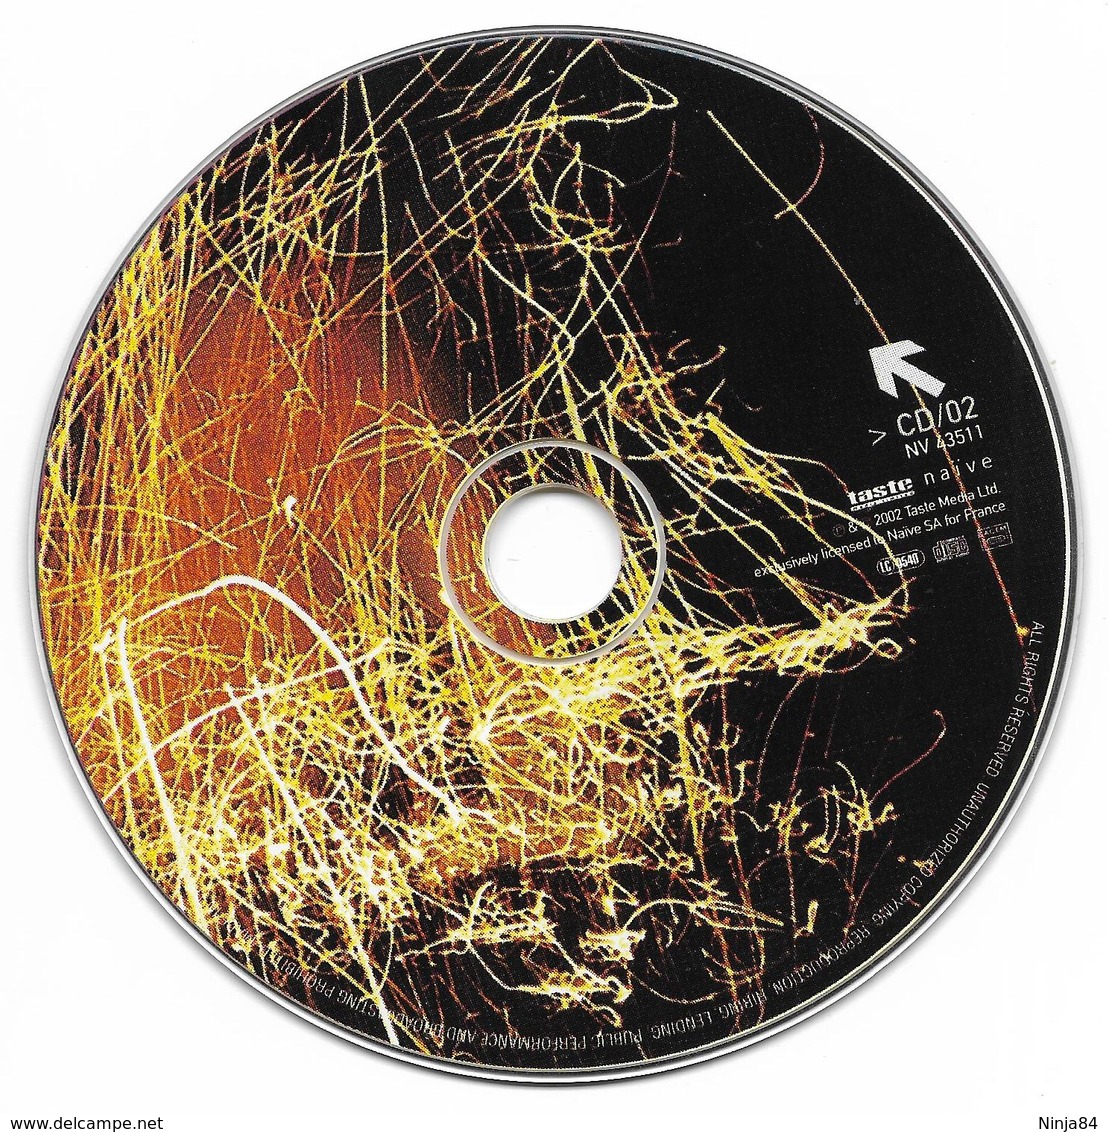 2 CD  Muse  "  Hullabaloo Soundtrack  " - Rock